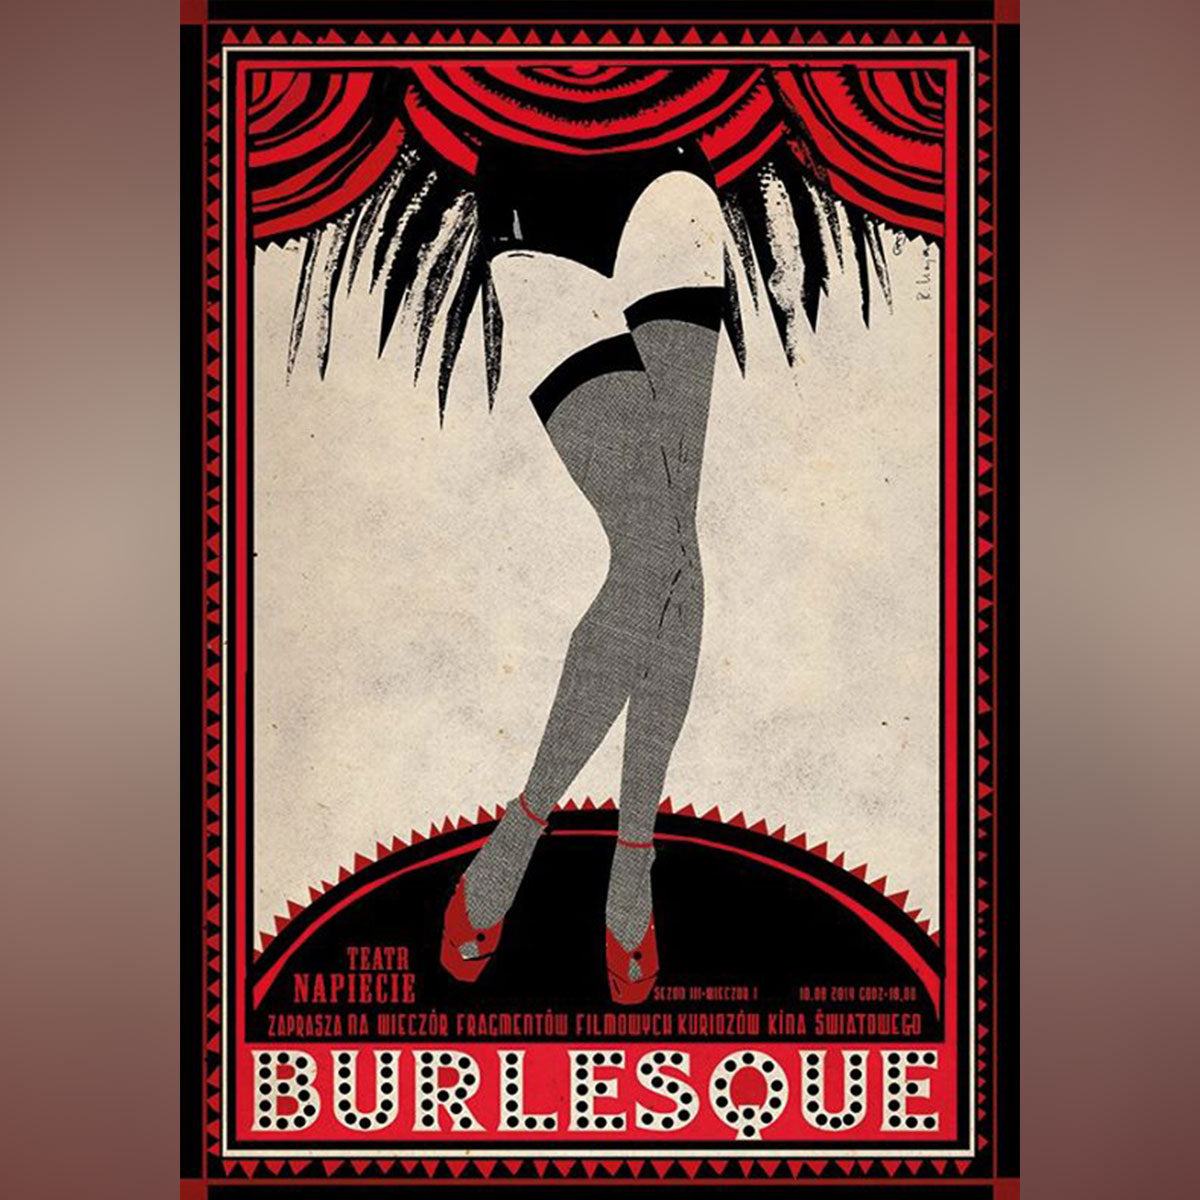 Burlesque (2014)